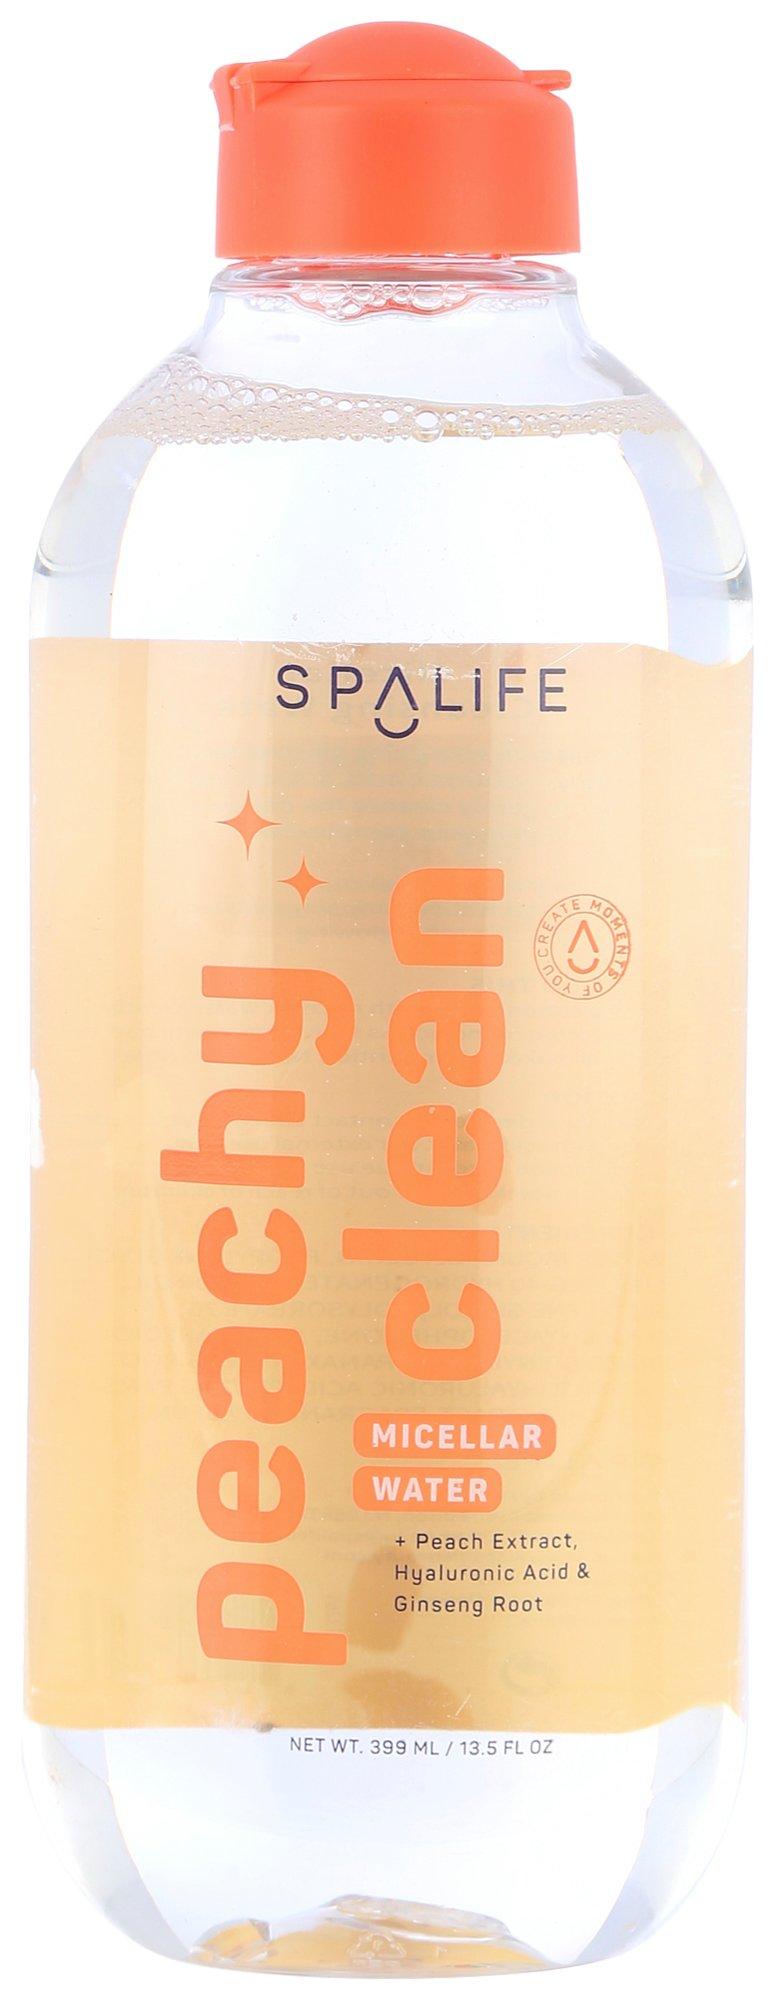 SpaLife Peachy Clean Micellar Water